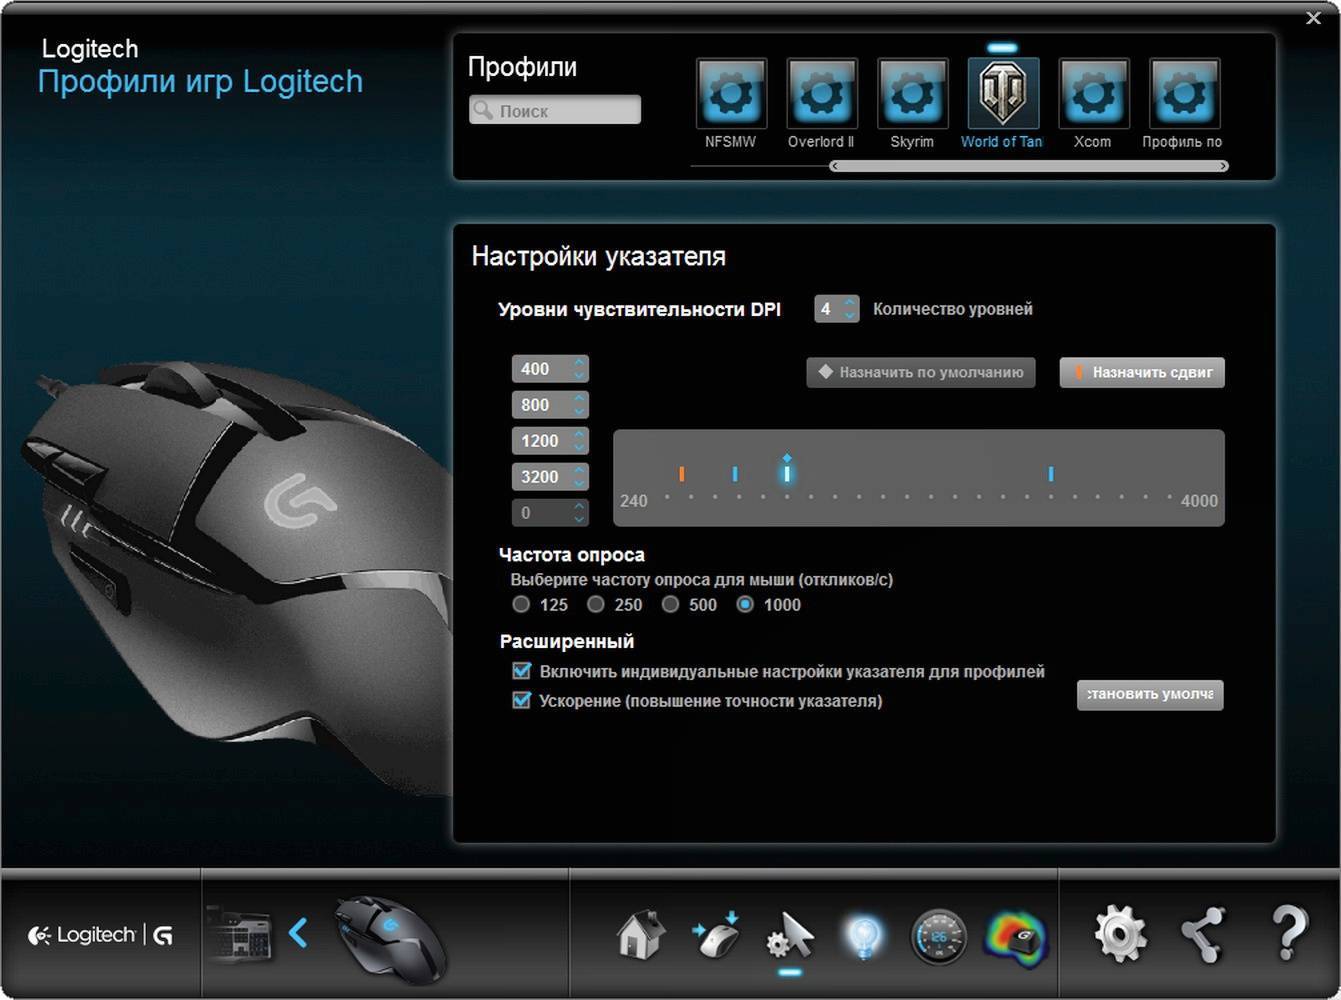 X-mouse button control - для назначения функций кнопкам мыши